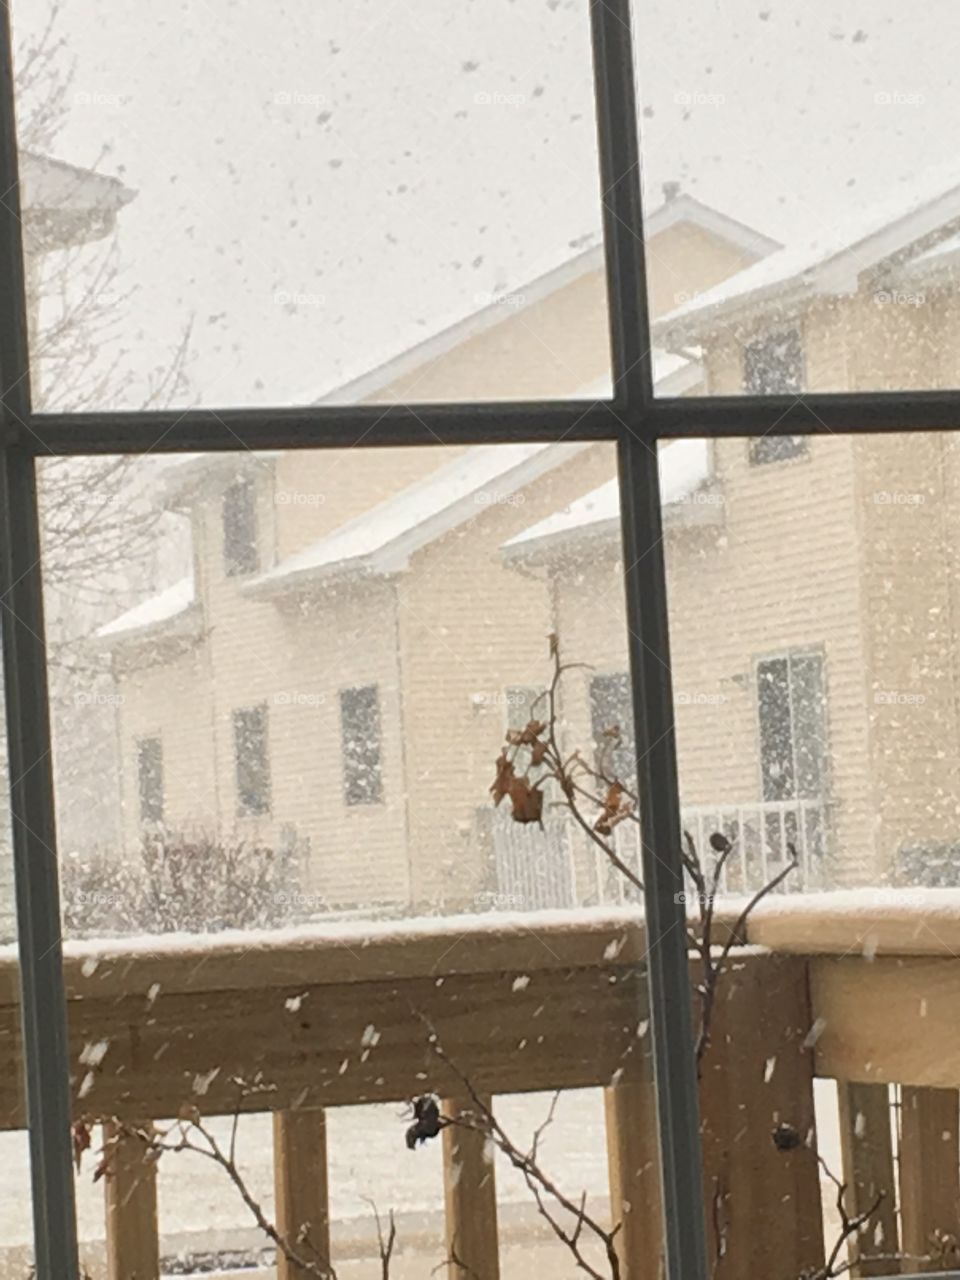 Raining snowflakes through sliding glass window pane against yellow apartments architecture in winter